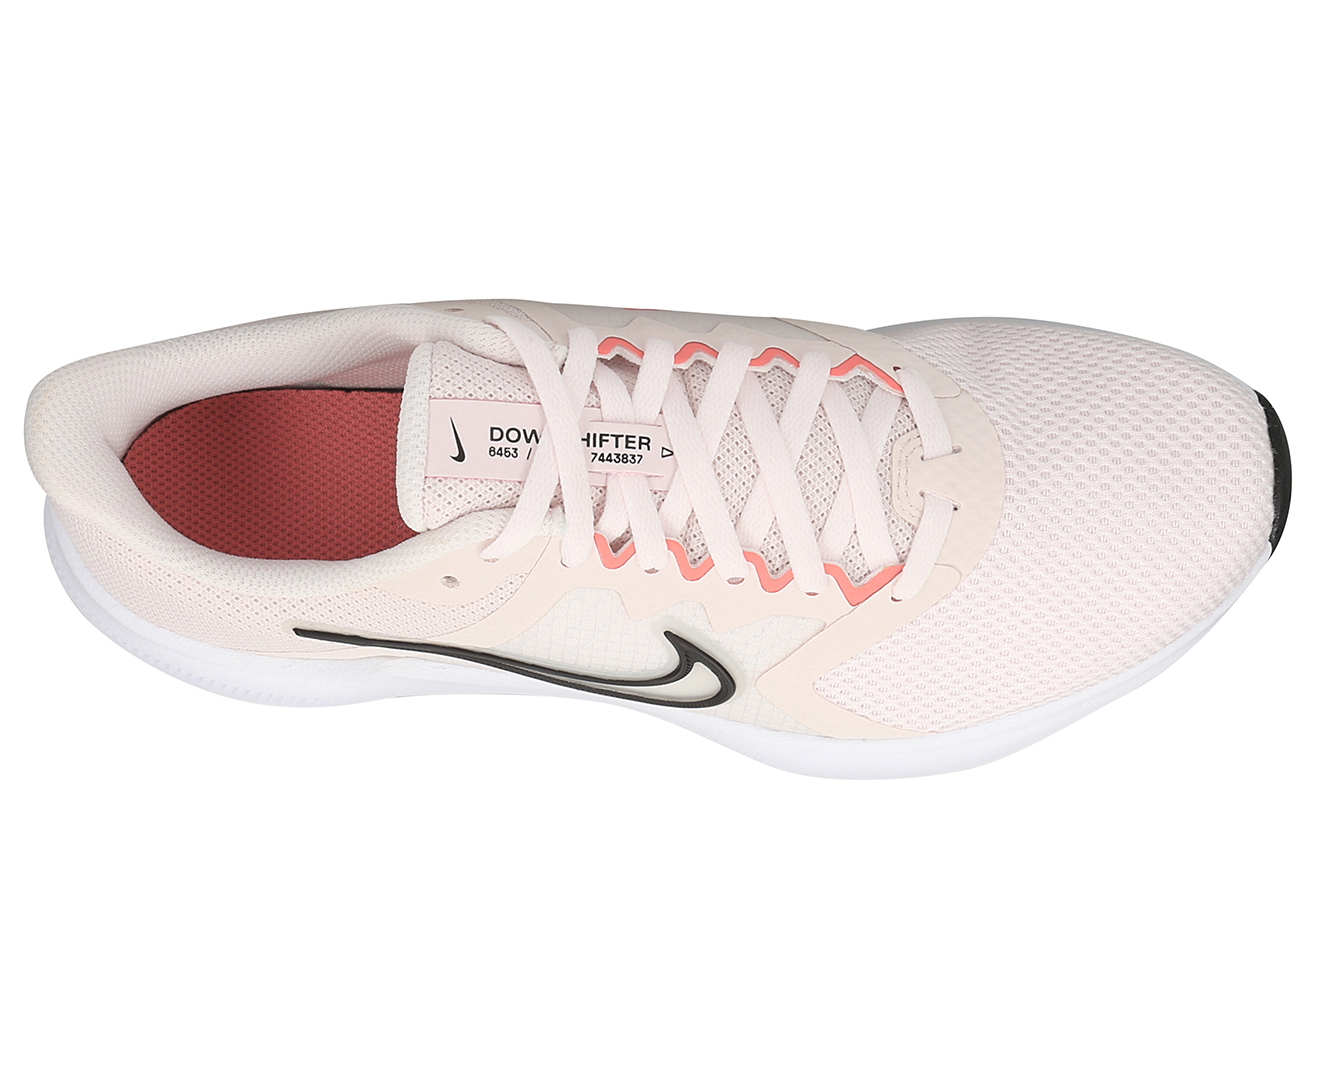 Nike Women's Downshifter 11 Running Shoes - Soft Pink/Black Magic/Ember ...